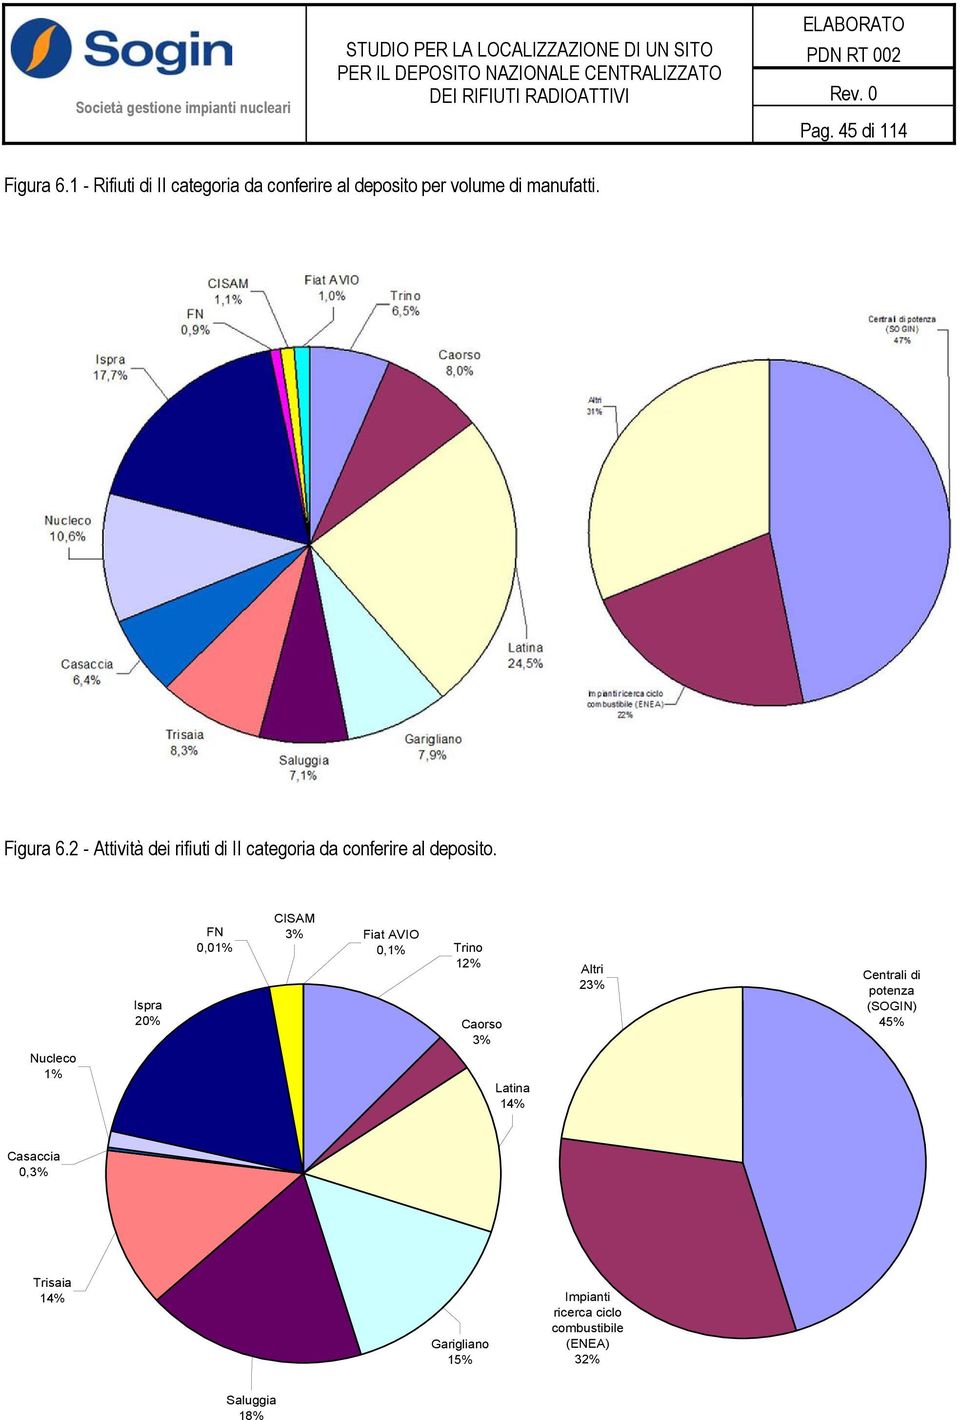 Nucleco 1% Ispra 20% FN 0,01% CISAM 3% Fiat AVIO 0,1% Trino 12% Caorso 3% Latina 14% Altri 23%